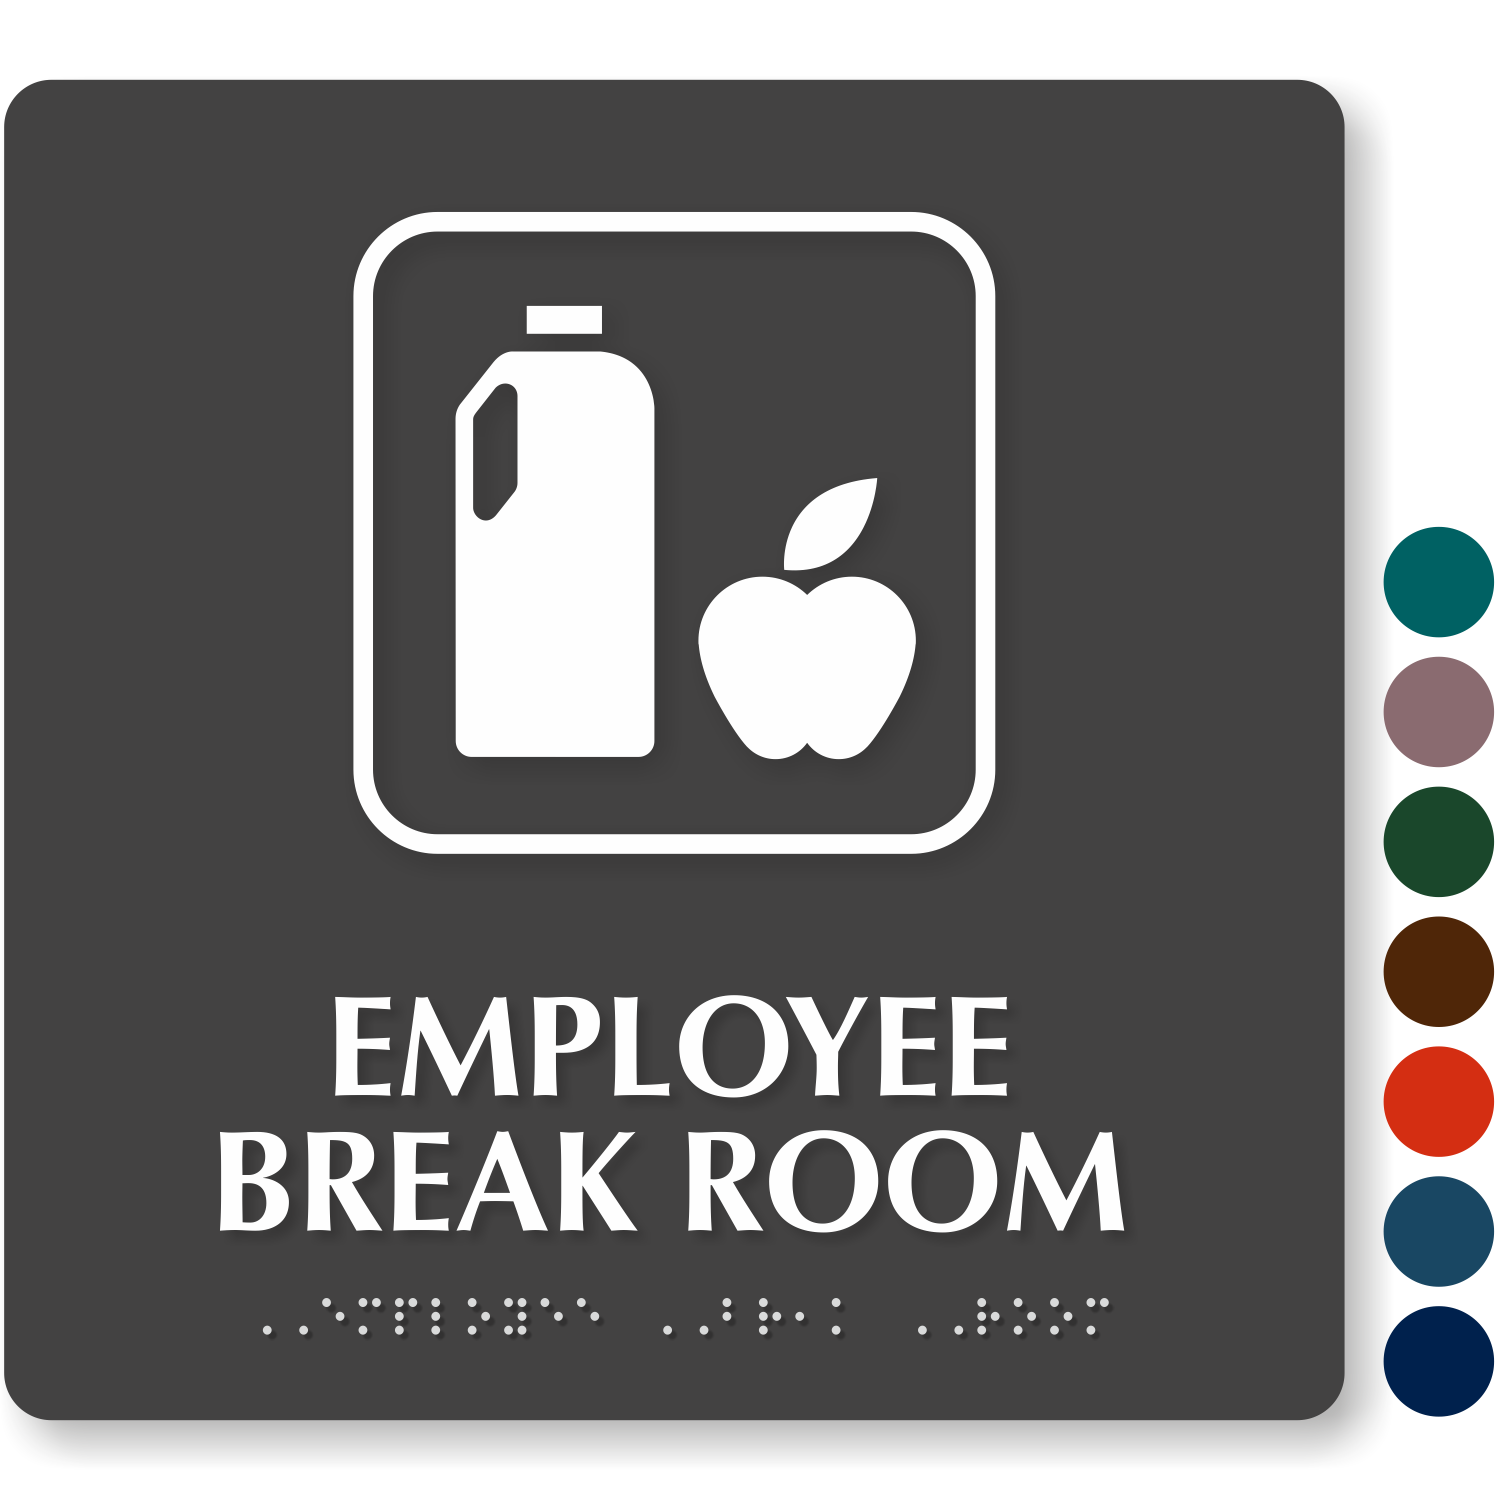 Lunch Room Signs Break Room Signs